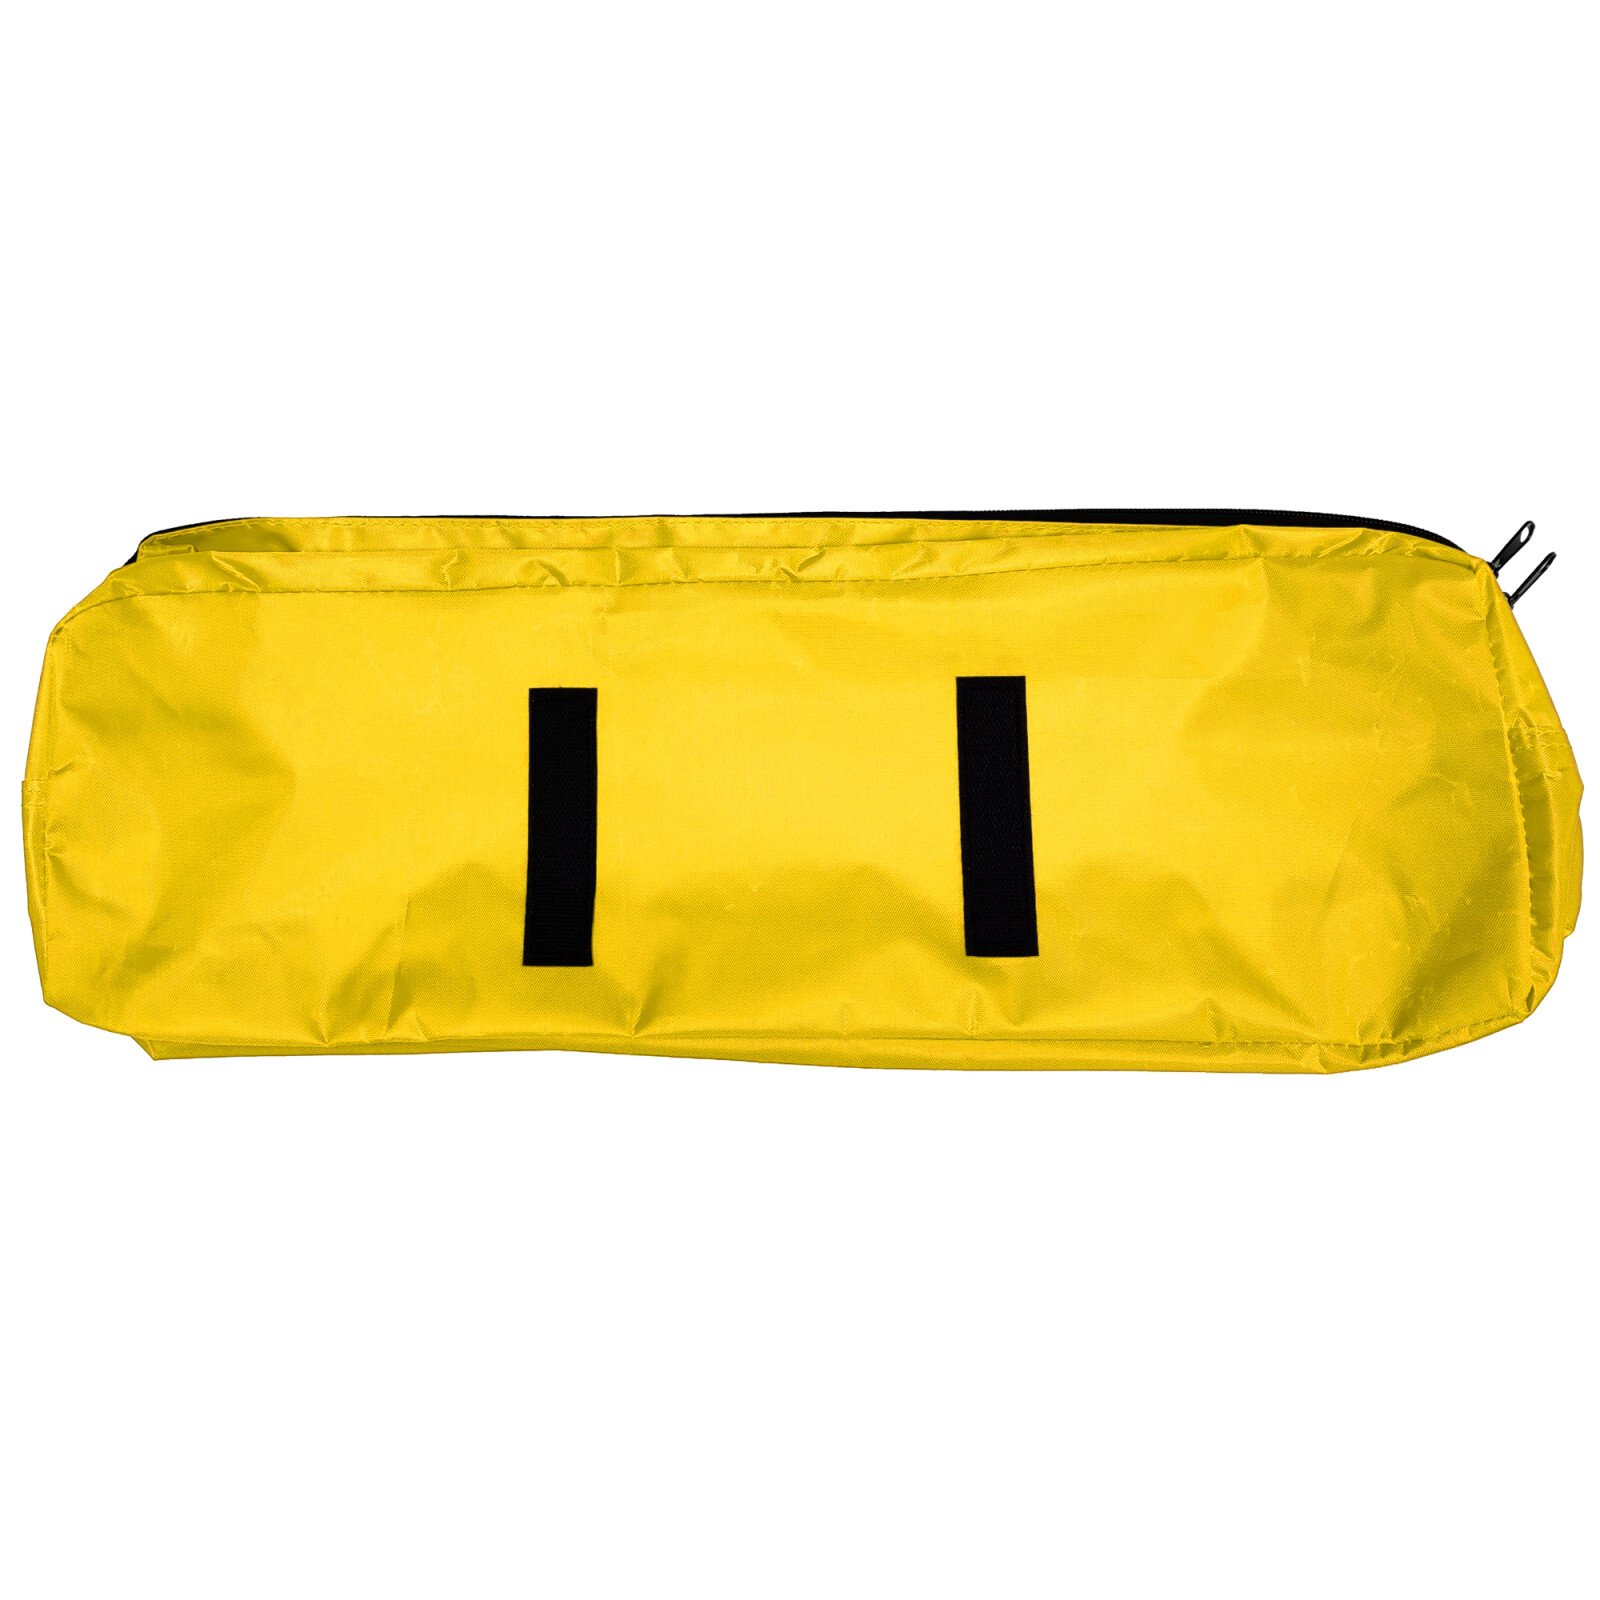 Cridem trunk organizer bag - Yellow/Black thumb